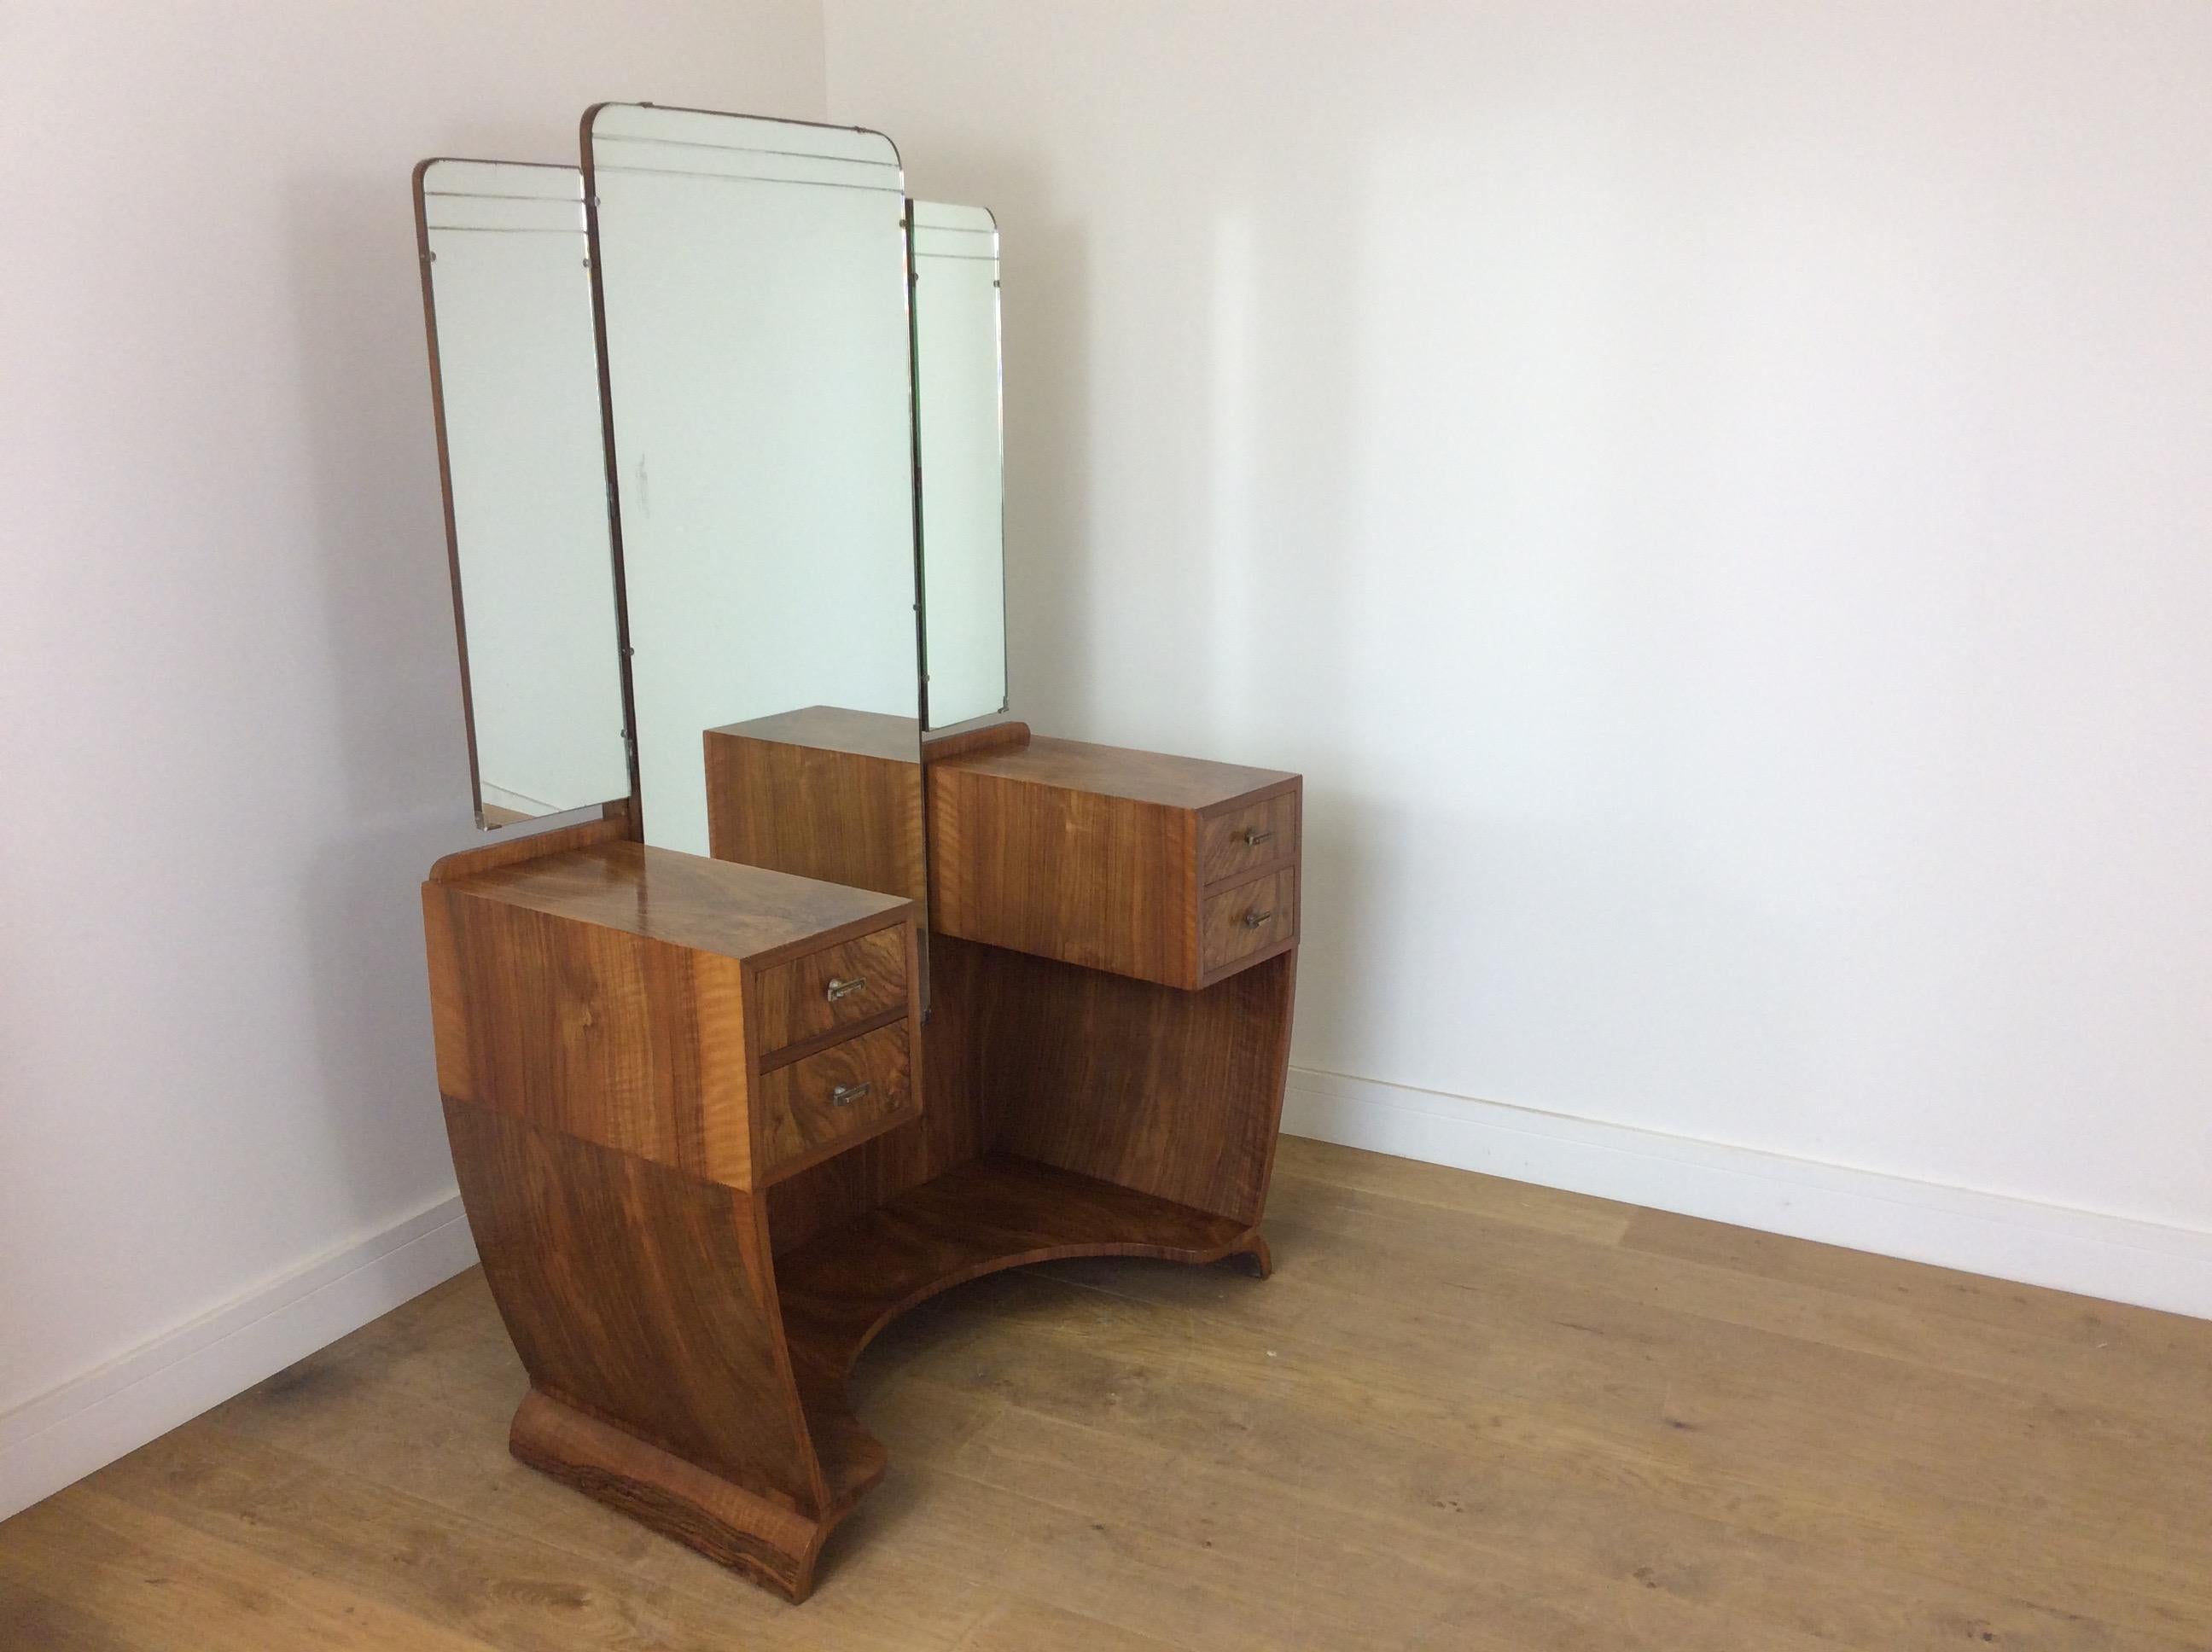 Art Deco dressing table with full length mirror.
Beautiful figured walnut.
Measures: 158 cm H, 107 cm W, 50 cm D
British, circa 1930.